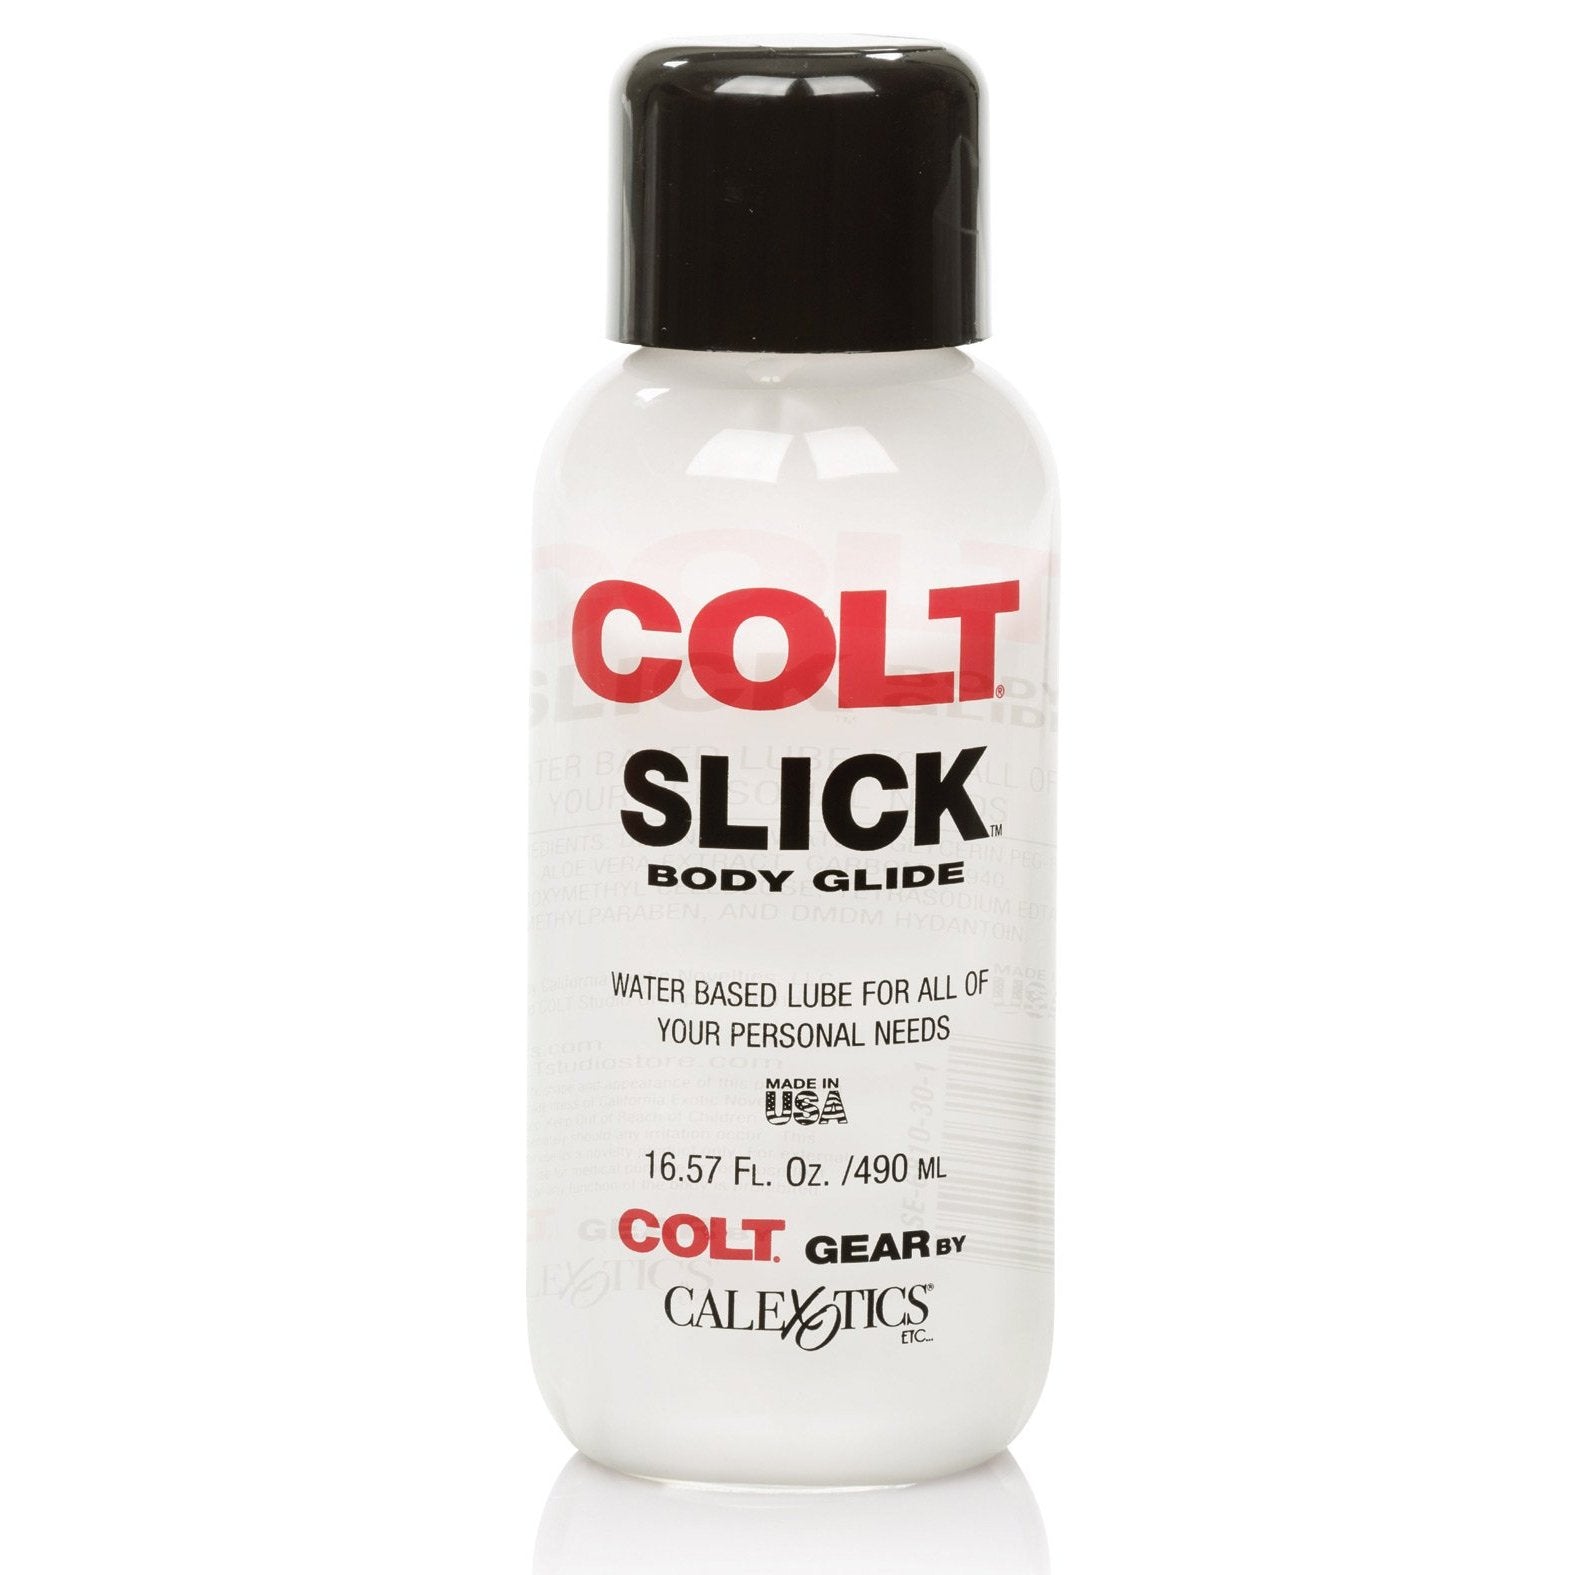 Colt Slick Personal Lube